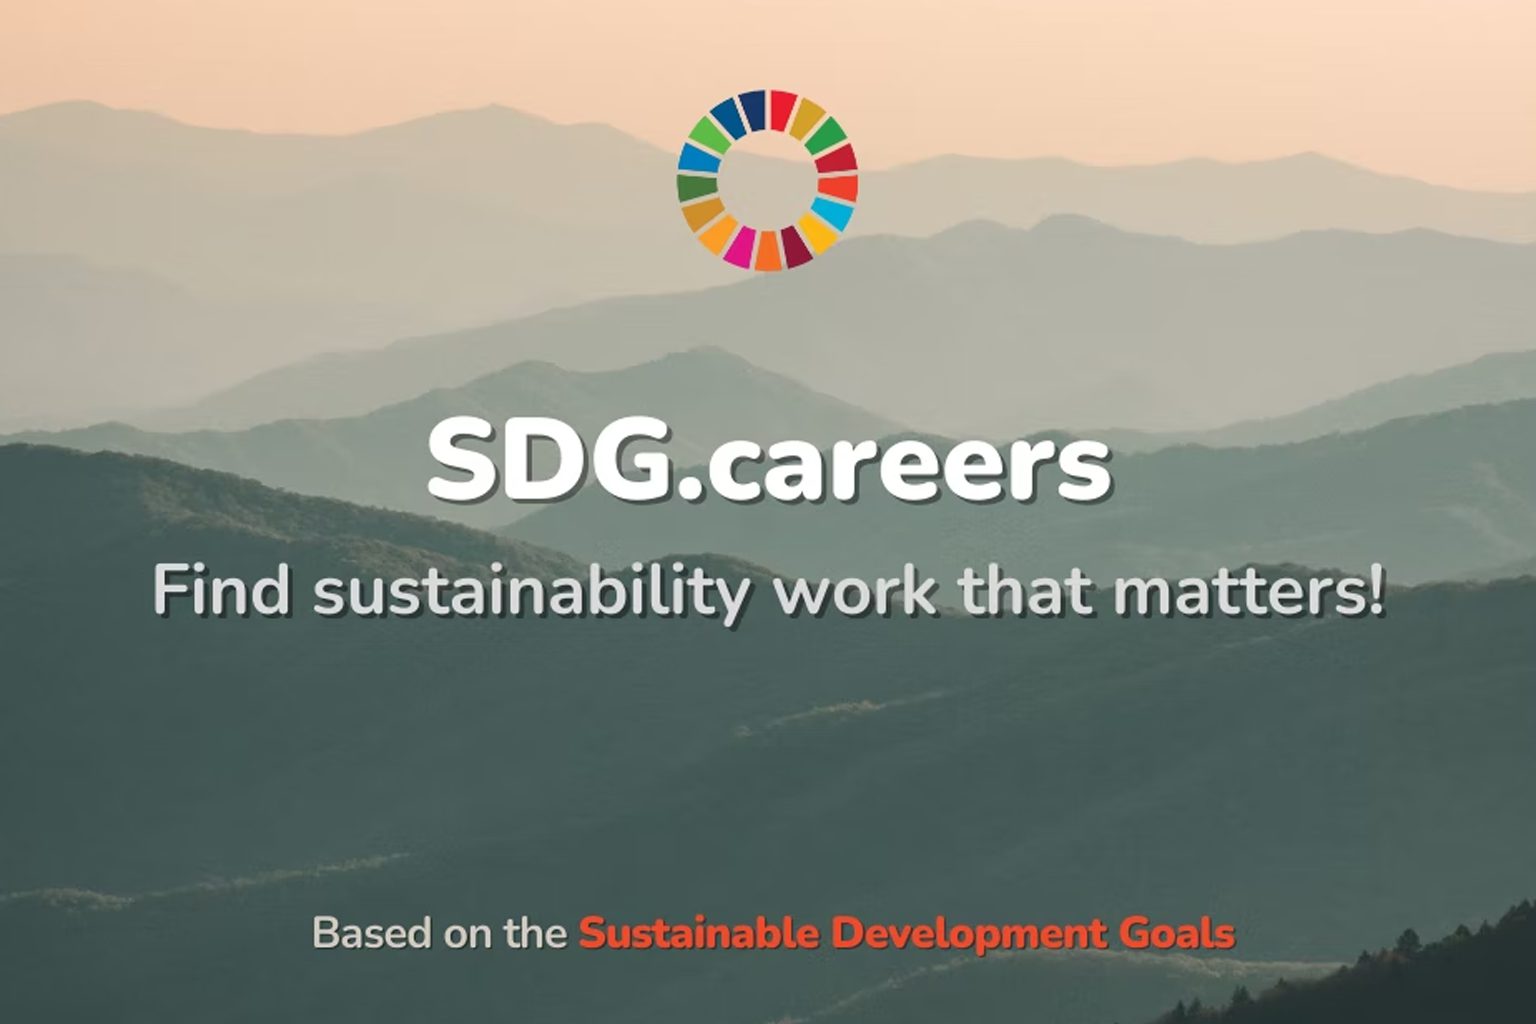 SDG careers image